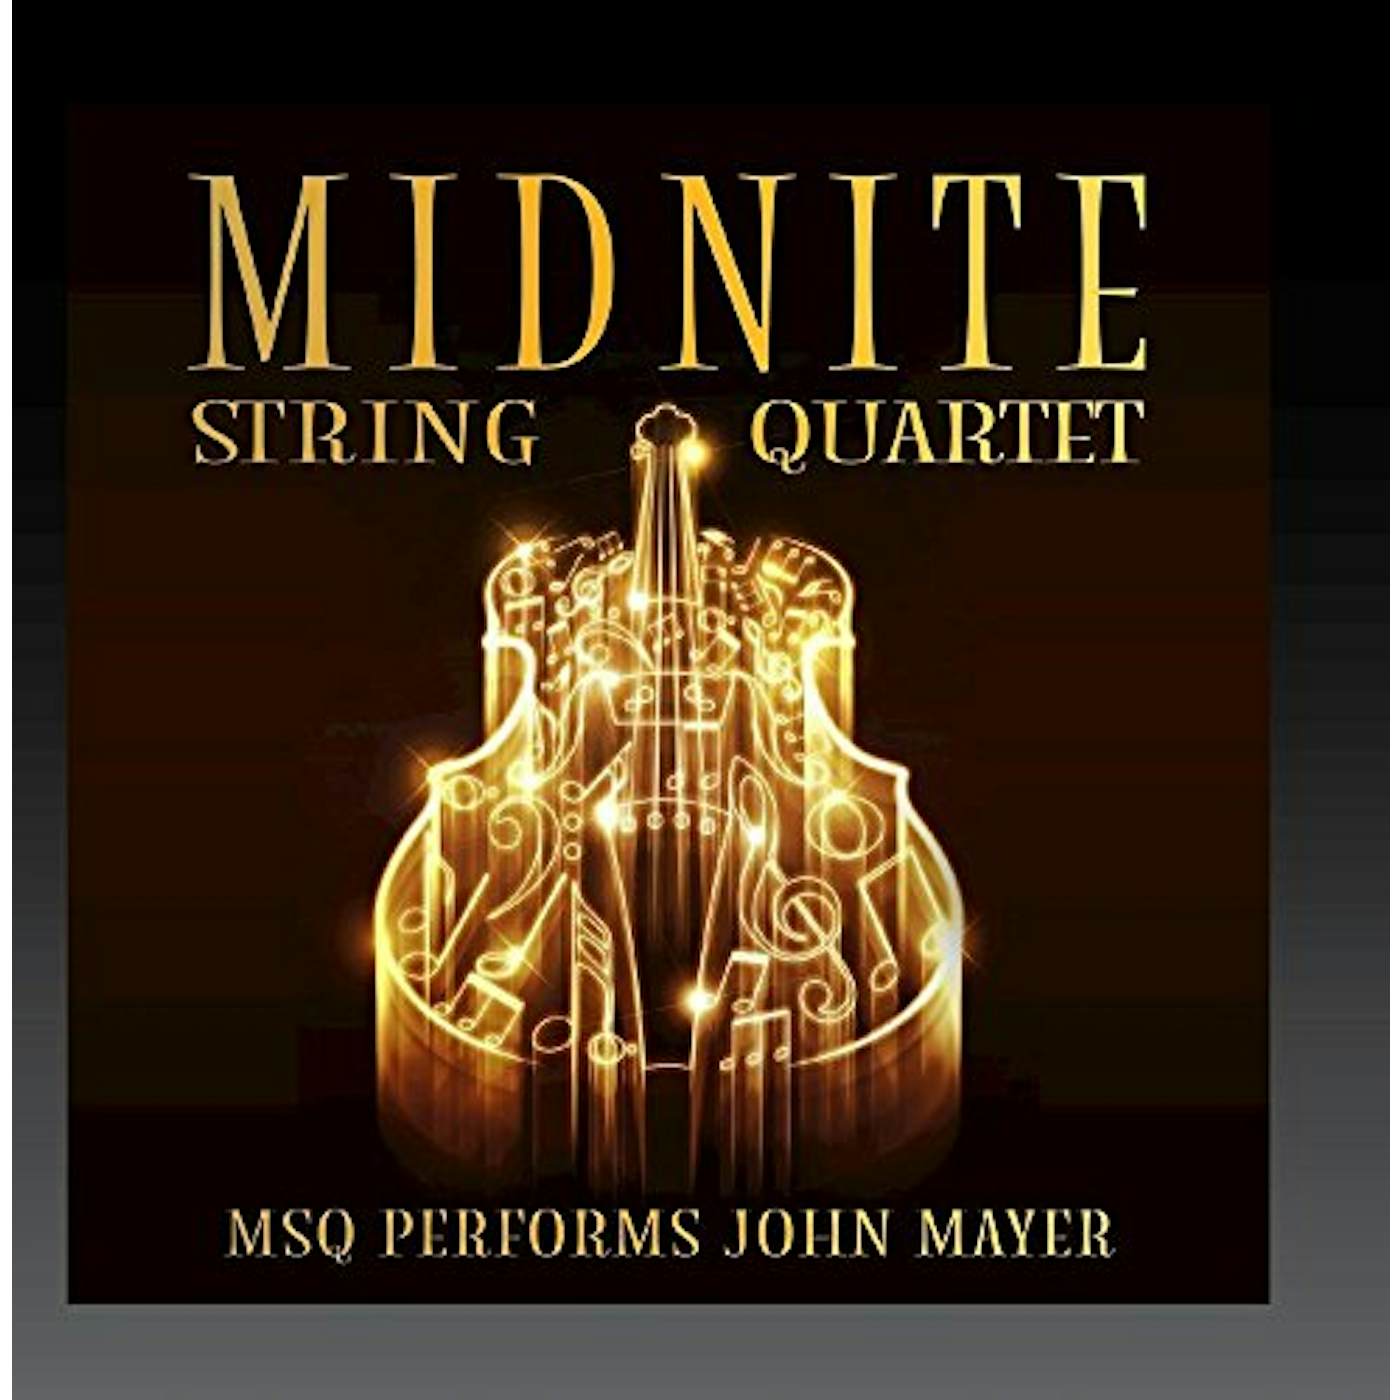 Midnite String Quartet MSQ PERFORMS JOHN MAYER (MOD) CD